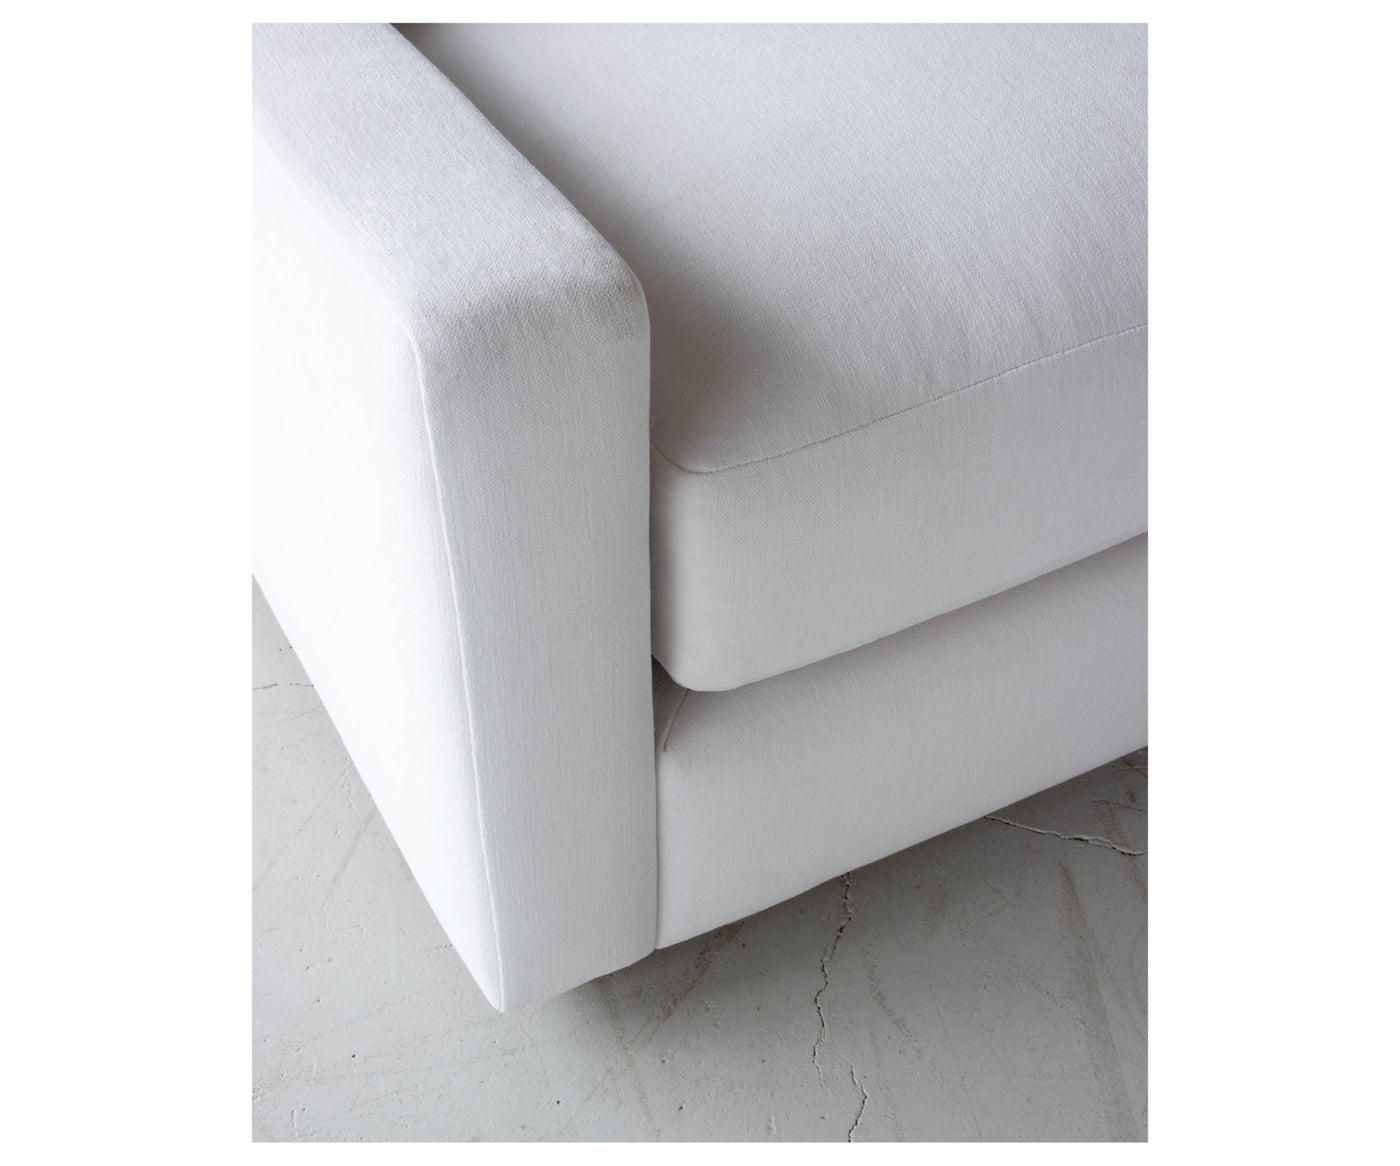 Coasty One-Arm Sofa - Modular Component